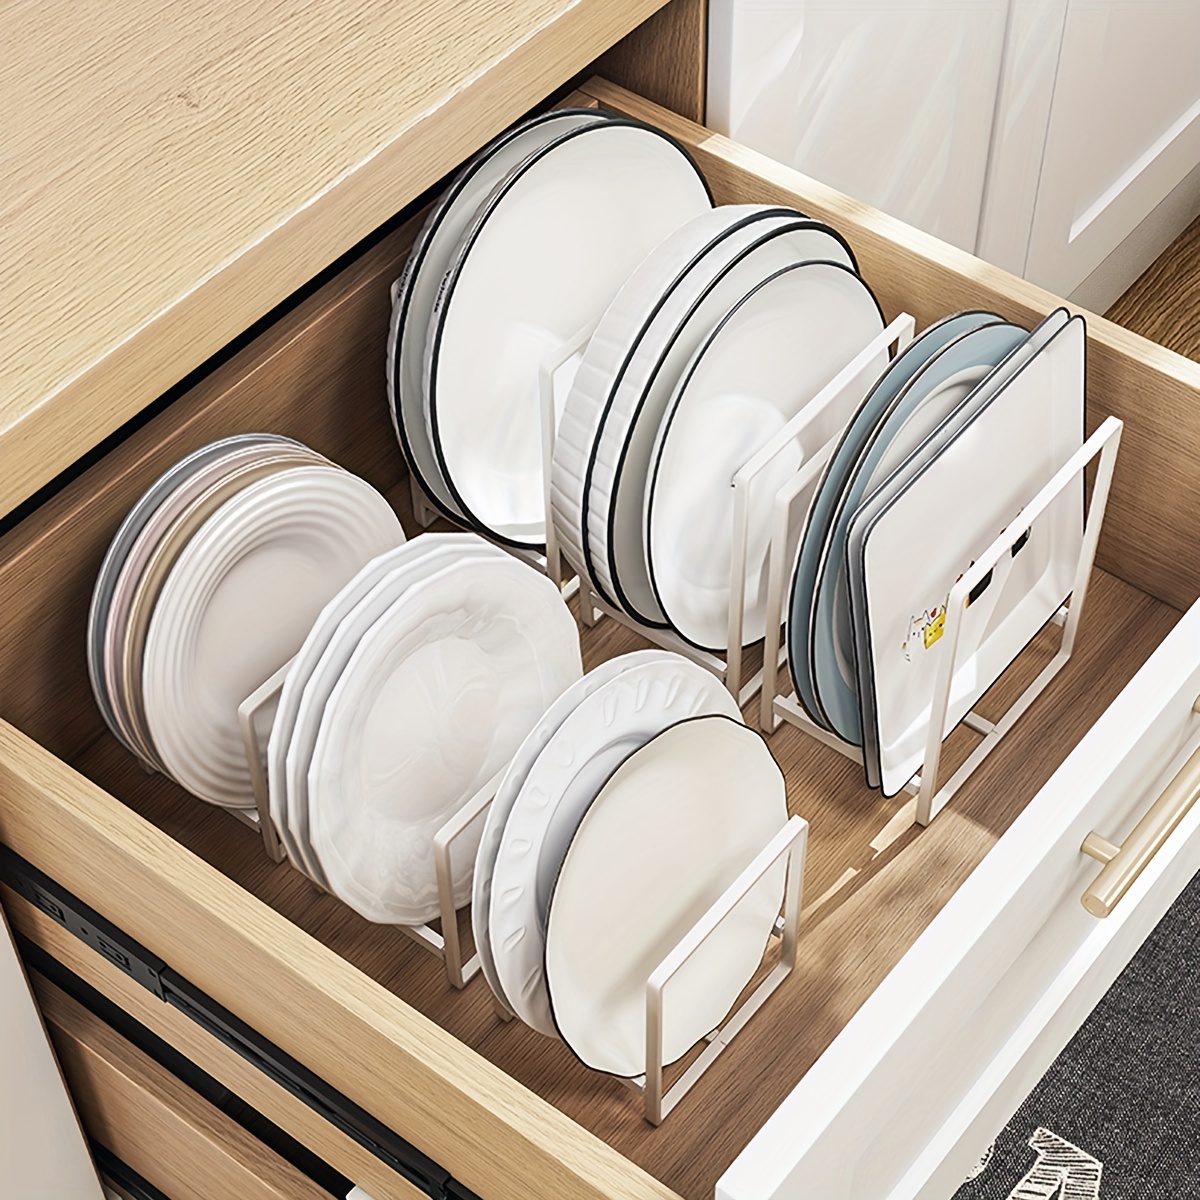 drainer lid drawer organizer plate, dish